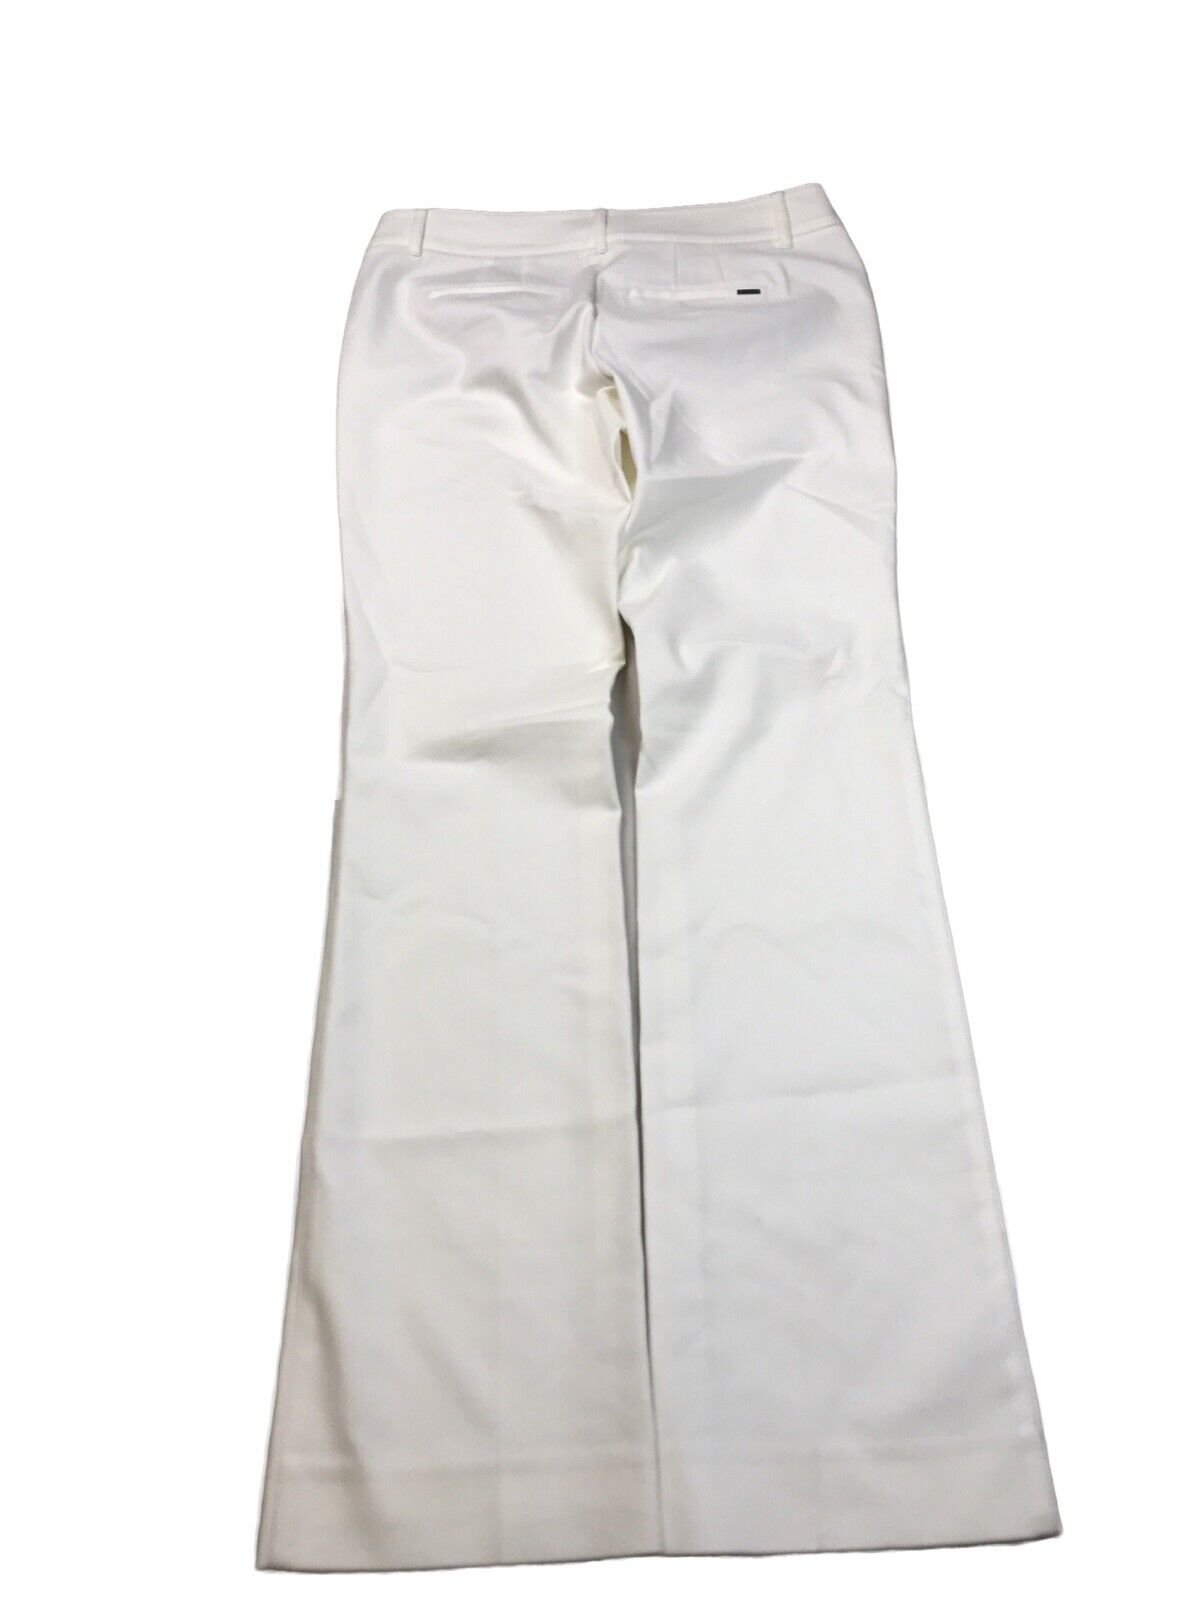 NEW White House Black Market Womens White Perfect Boot Cut Dress Pants-4R